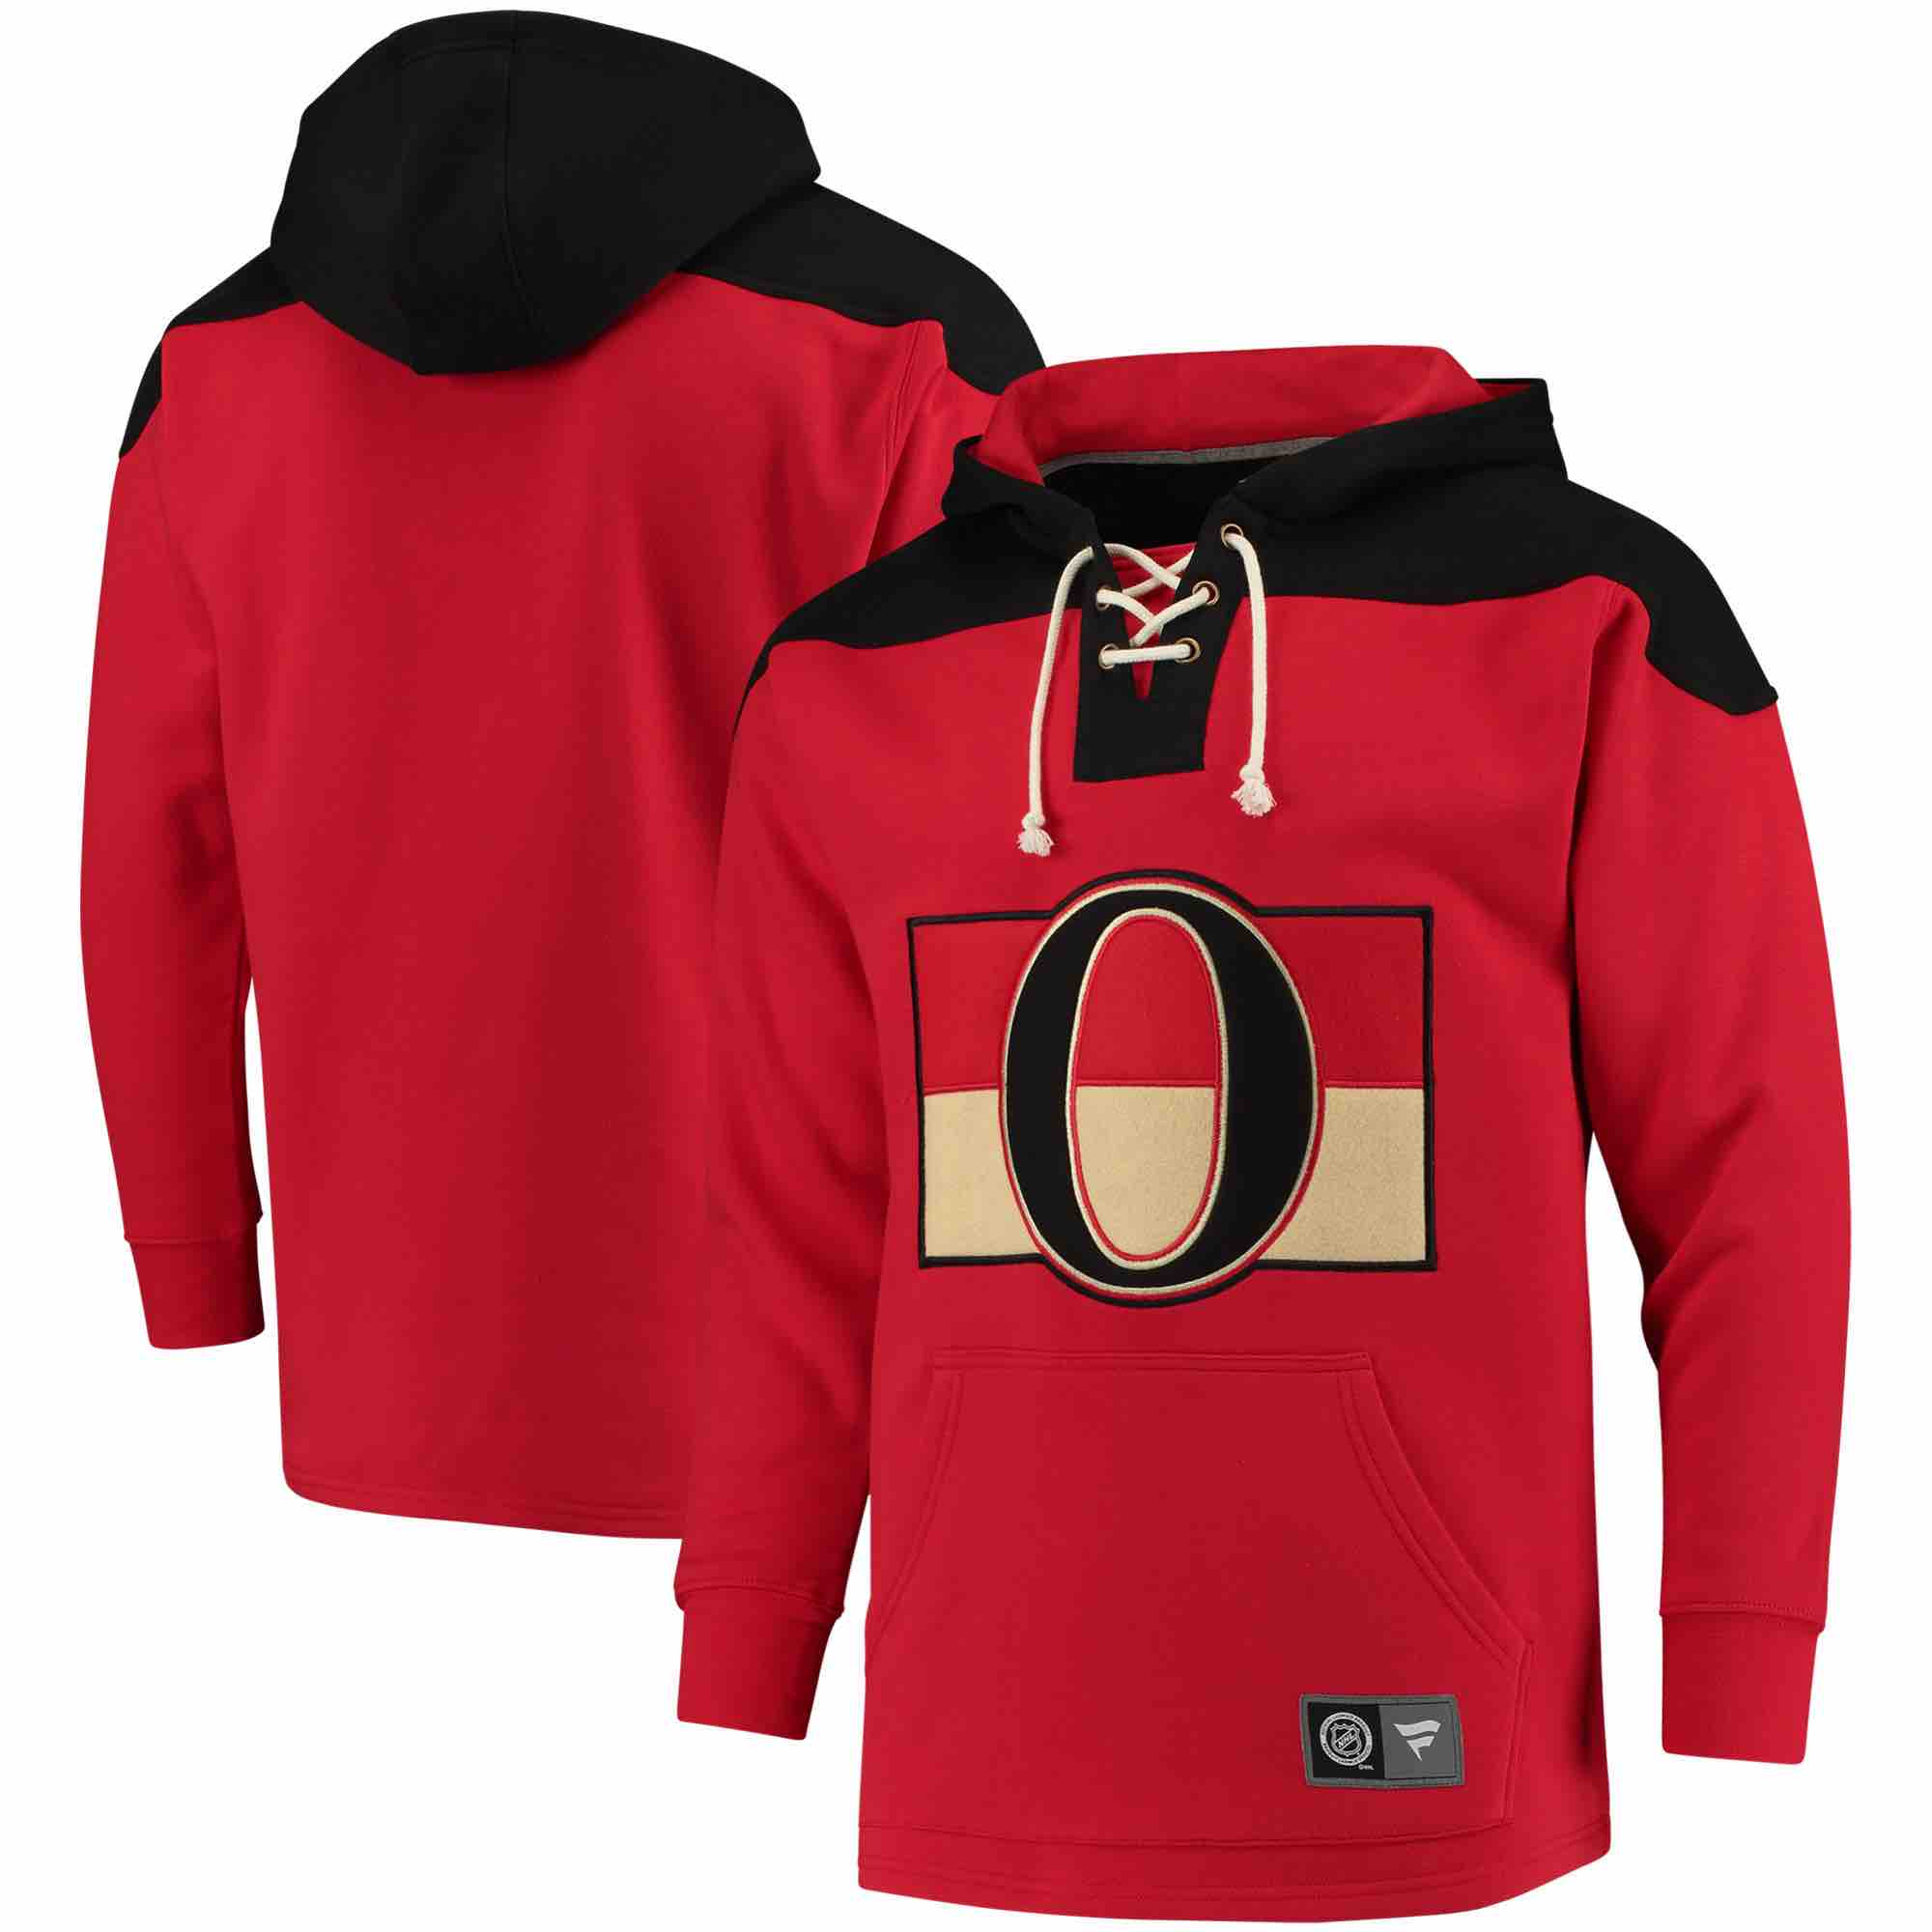 NHL Ottawa Senators Red Personalized Hoodie